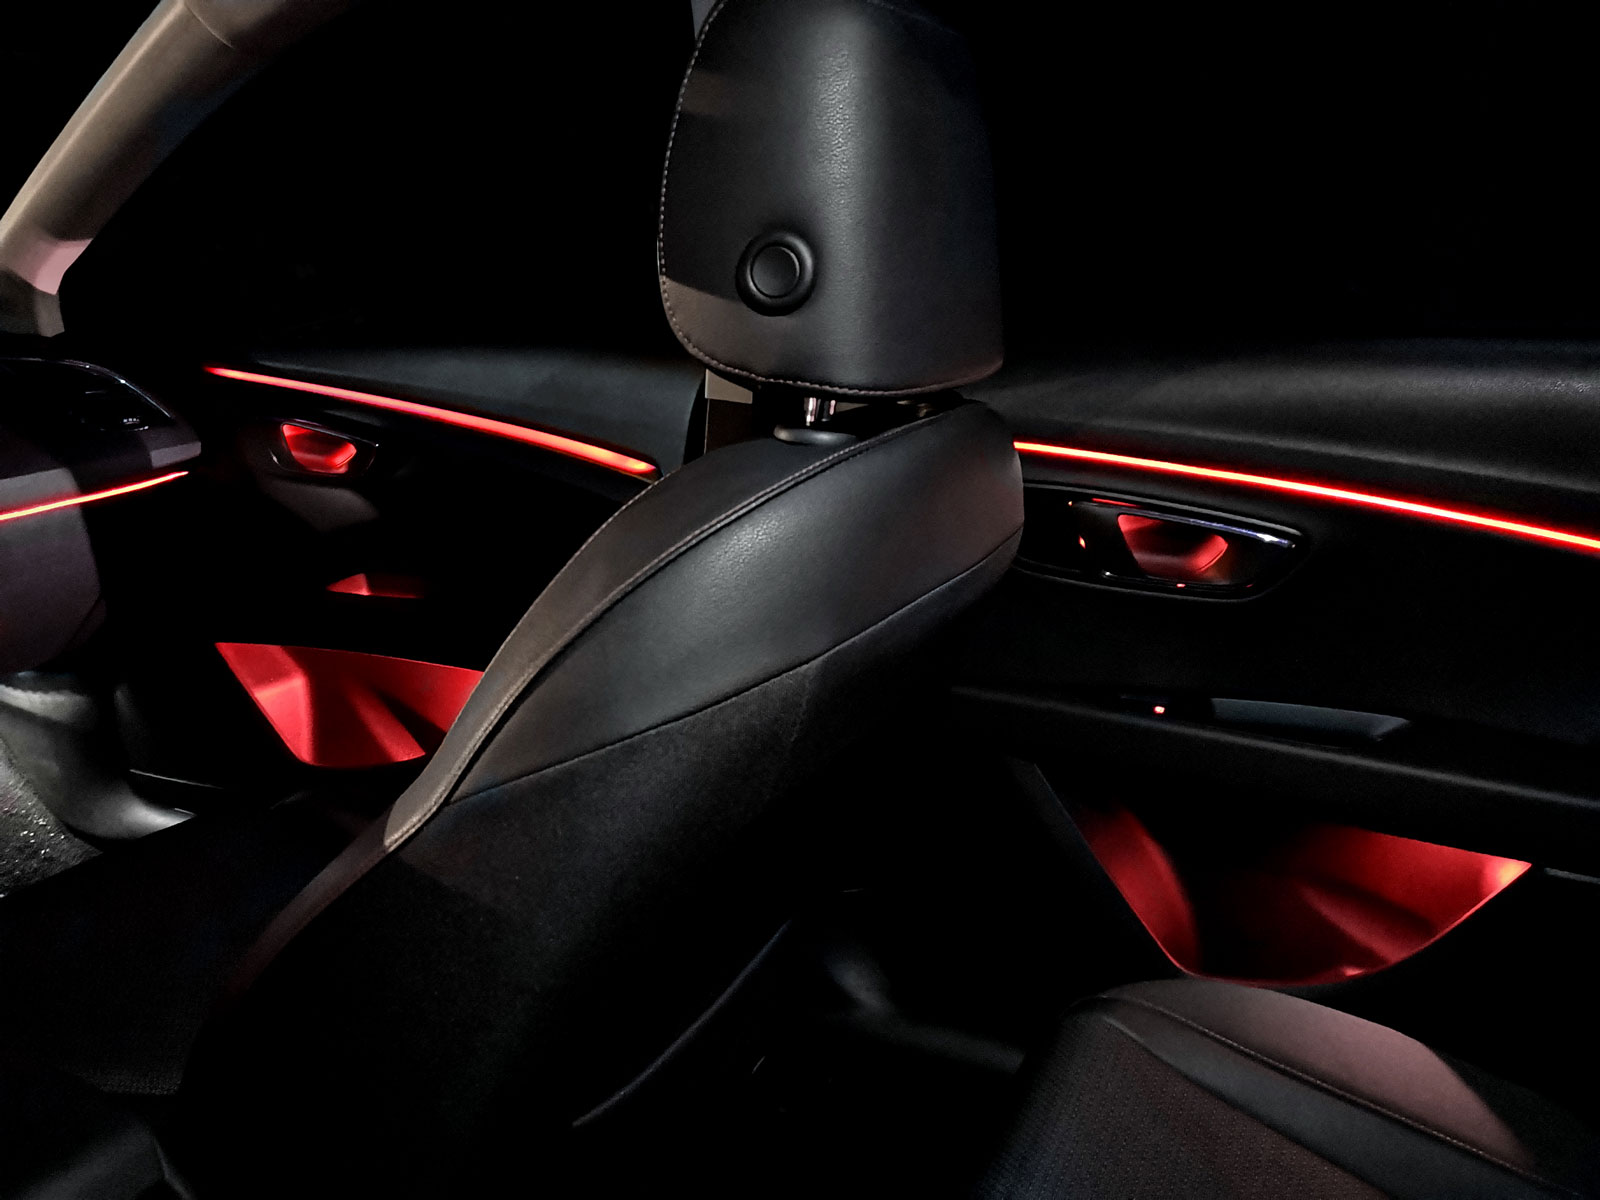 Toyota Kompatible Auto Innere Türgriffschale beleuchtung Atmosphäre Licht 